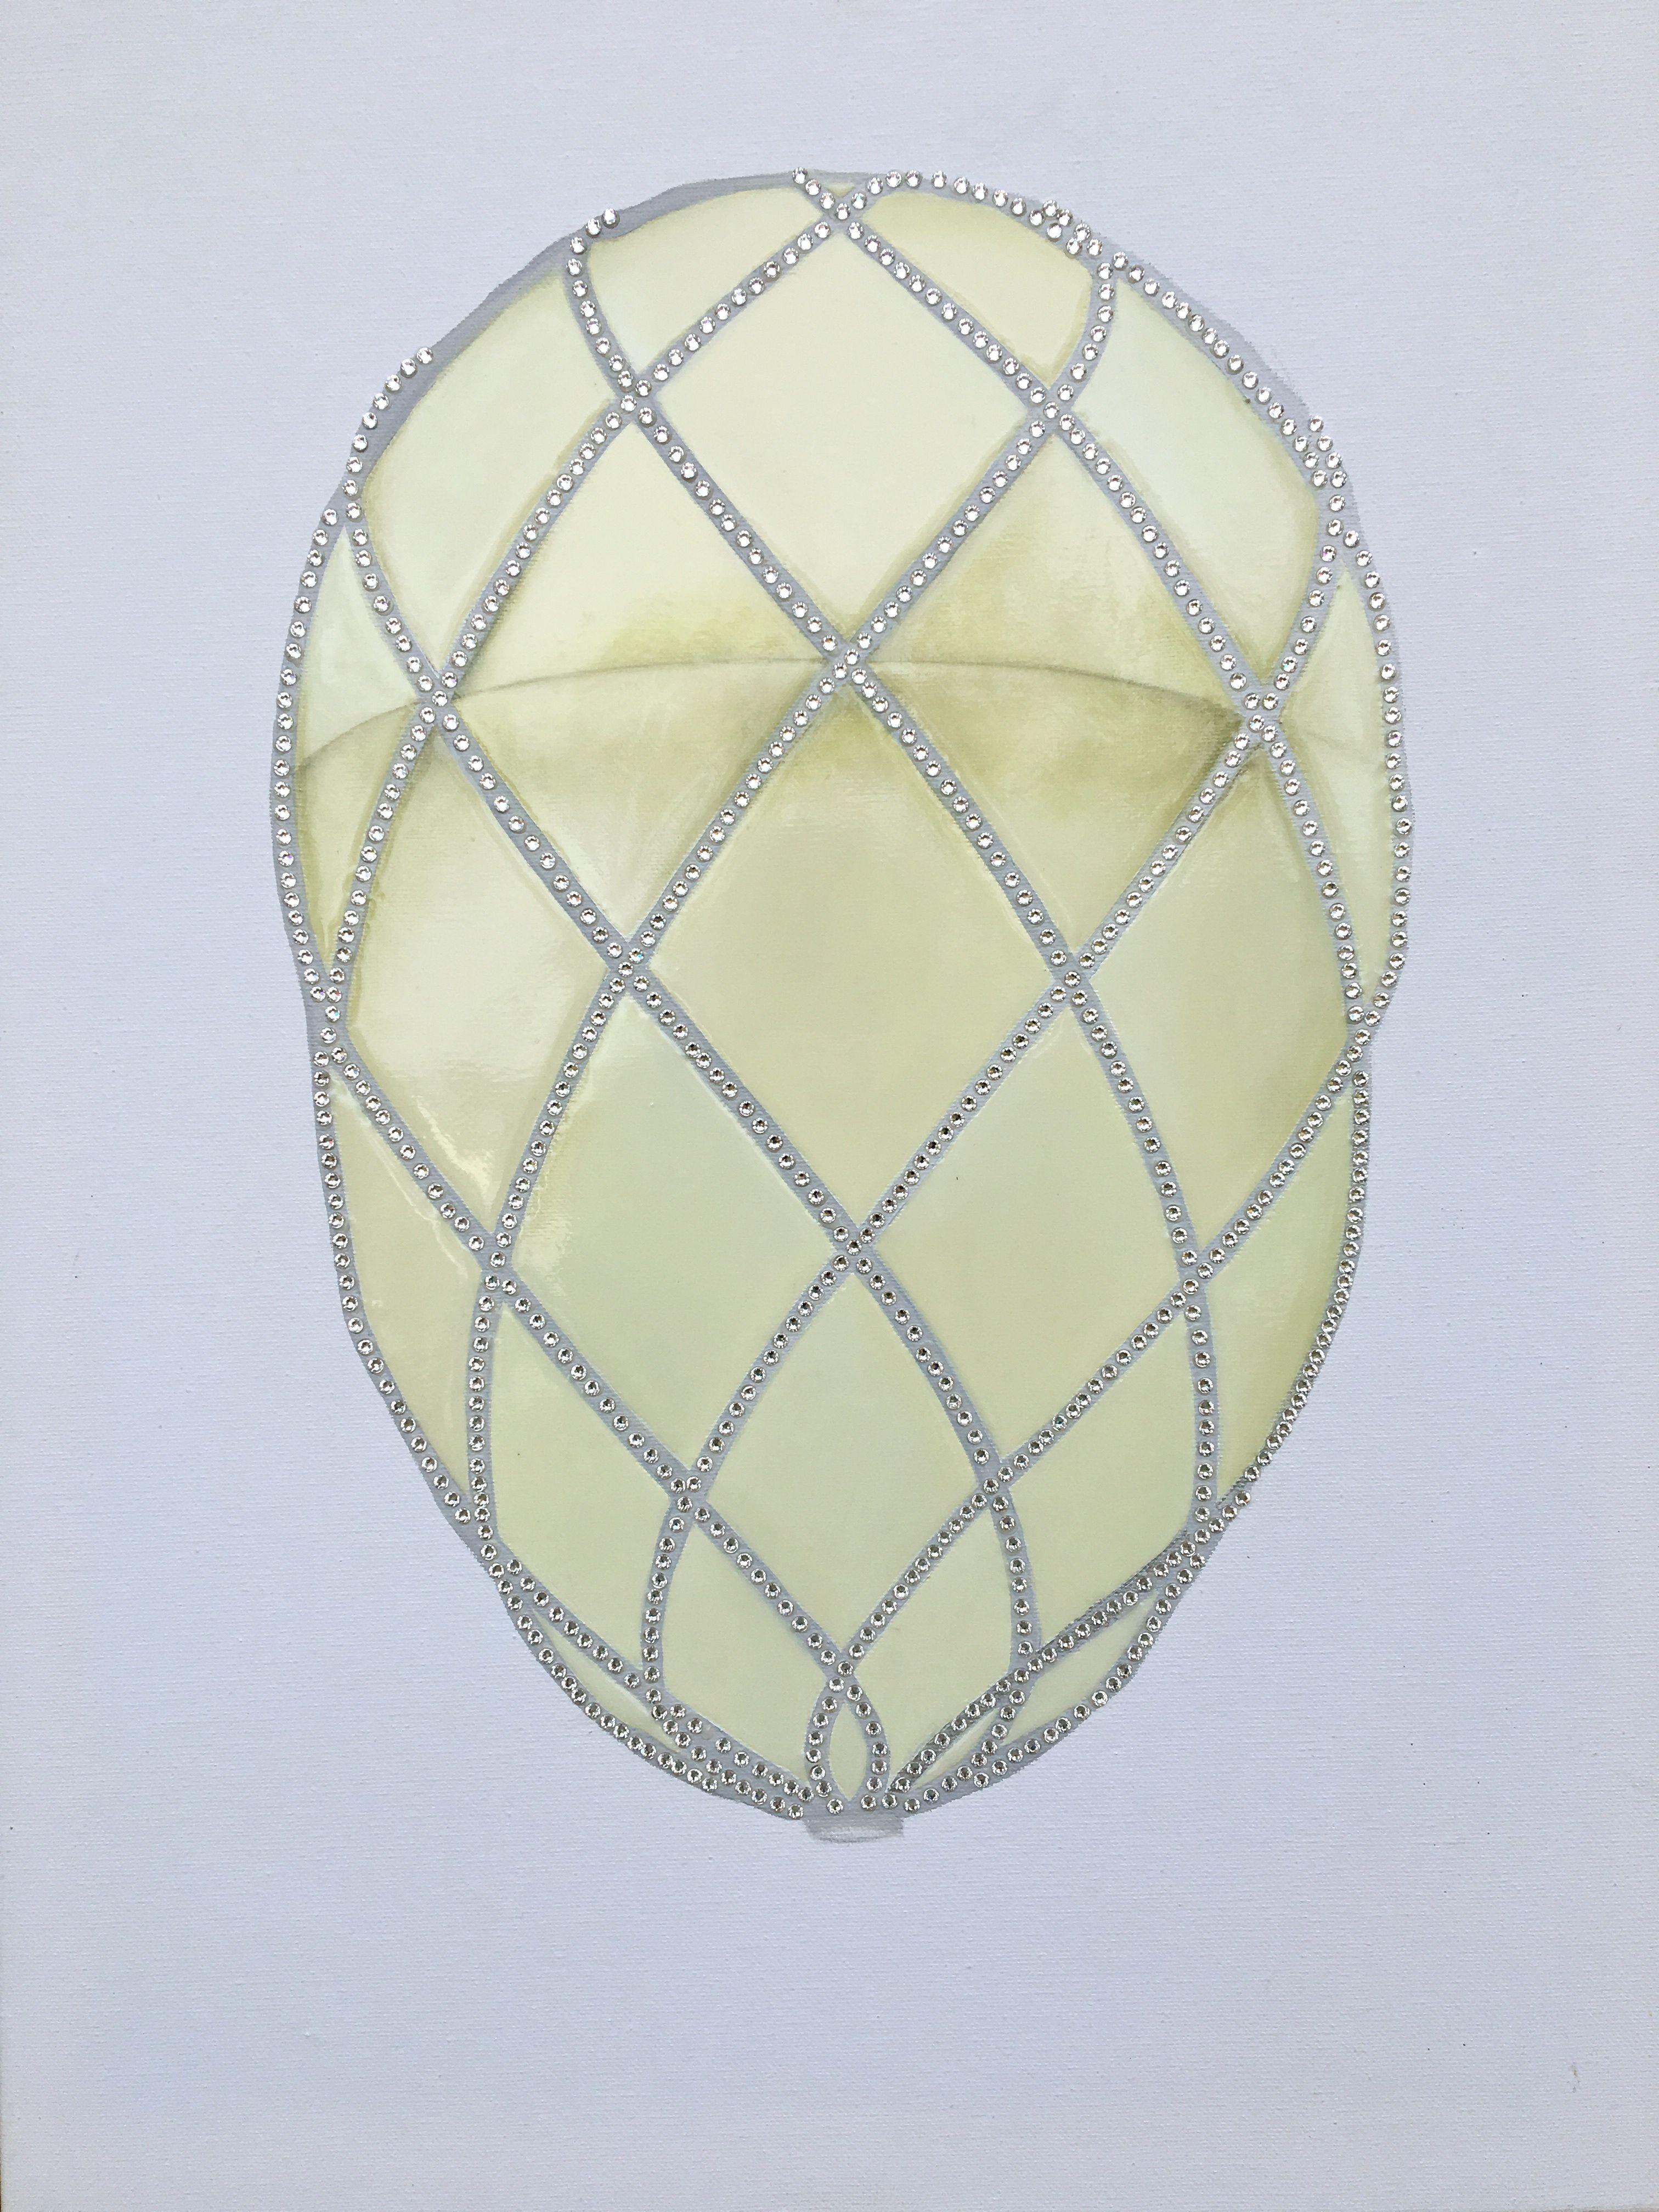 Faberge Diamond Trellis Egg with Unique Swarovski Crystals Mosaic Oil Art